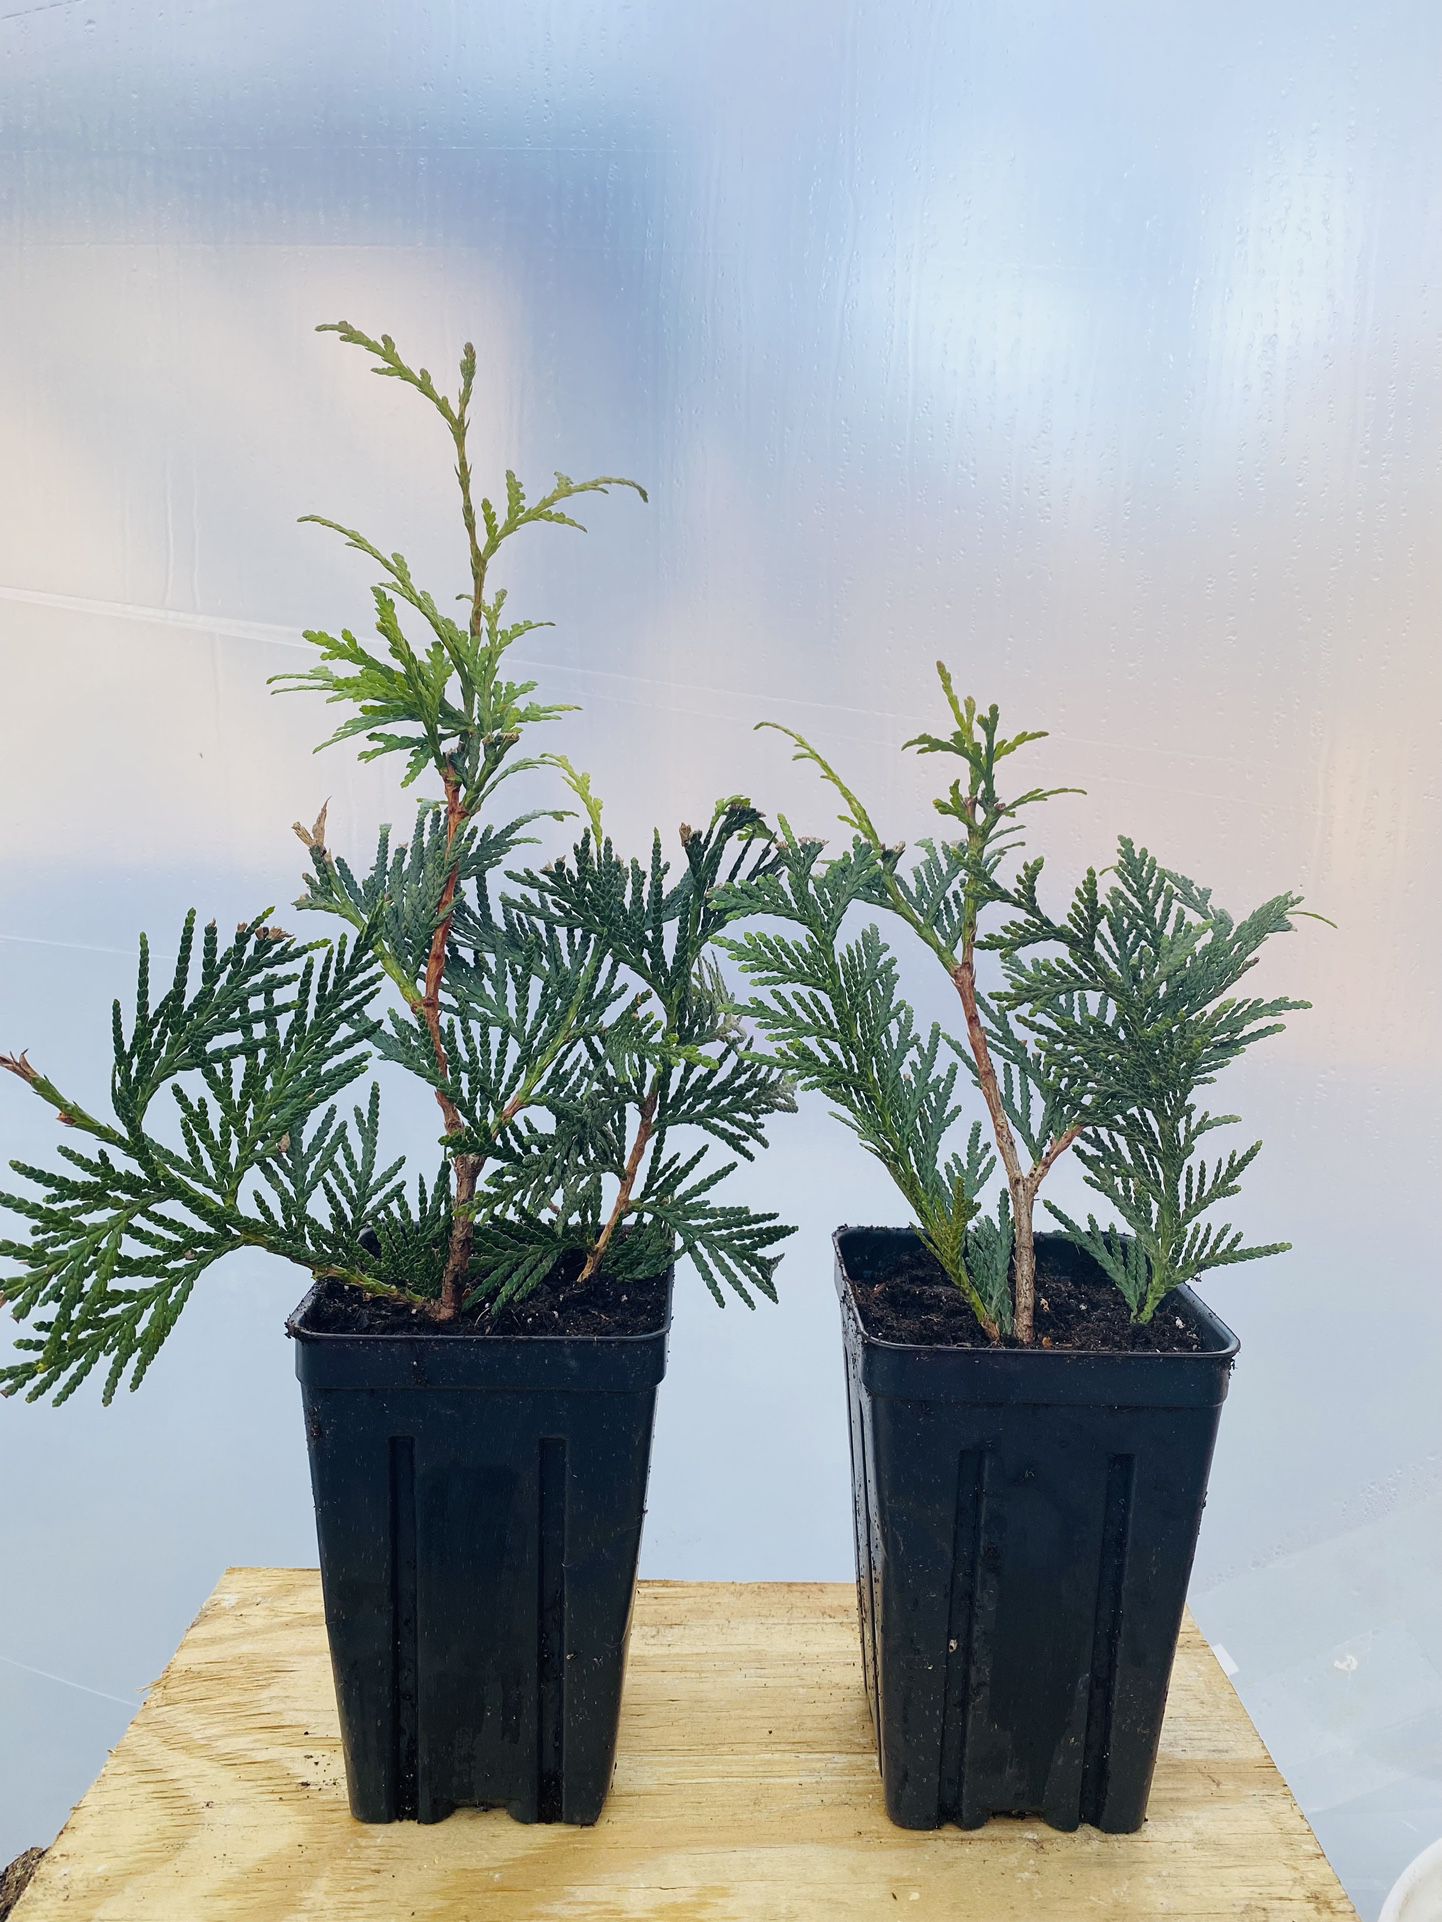 2 Plants Green Giant Arbovitae 7” Tall